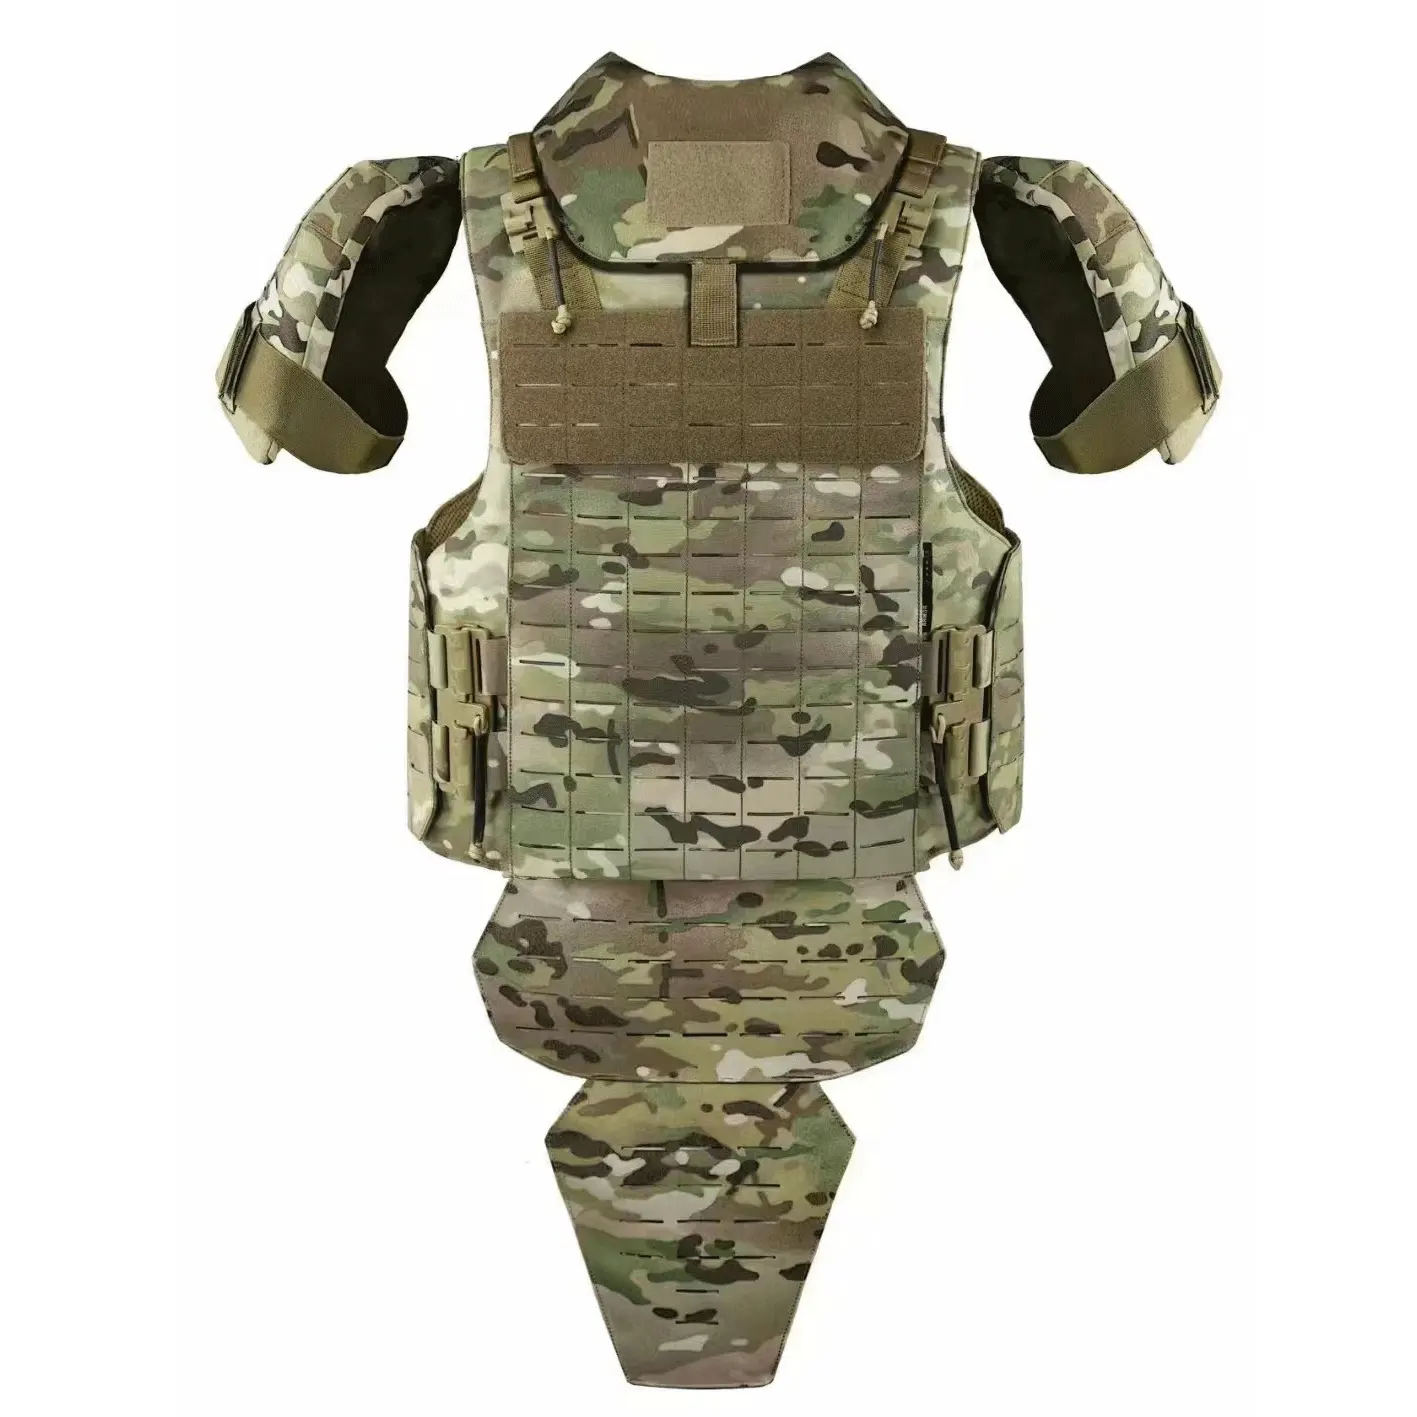 Outdoor Full Coverage Black 1000D Nylon Molle Camo Plate Carrier Combat Chalecos Tactical Vest Armor Vest